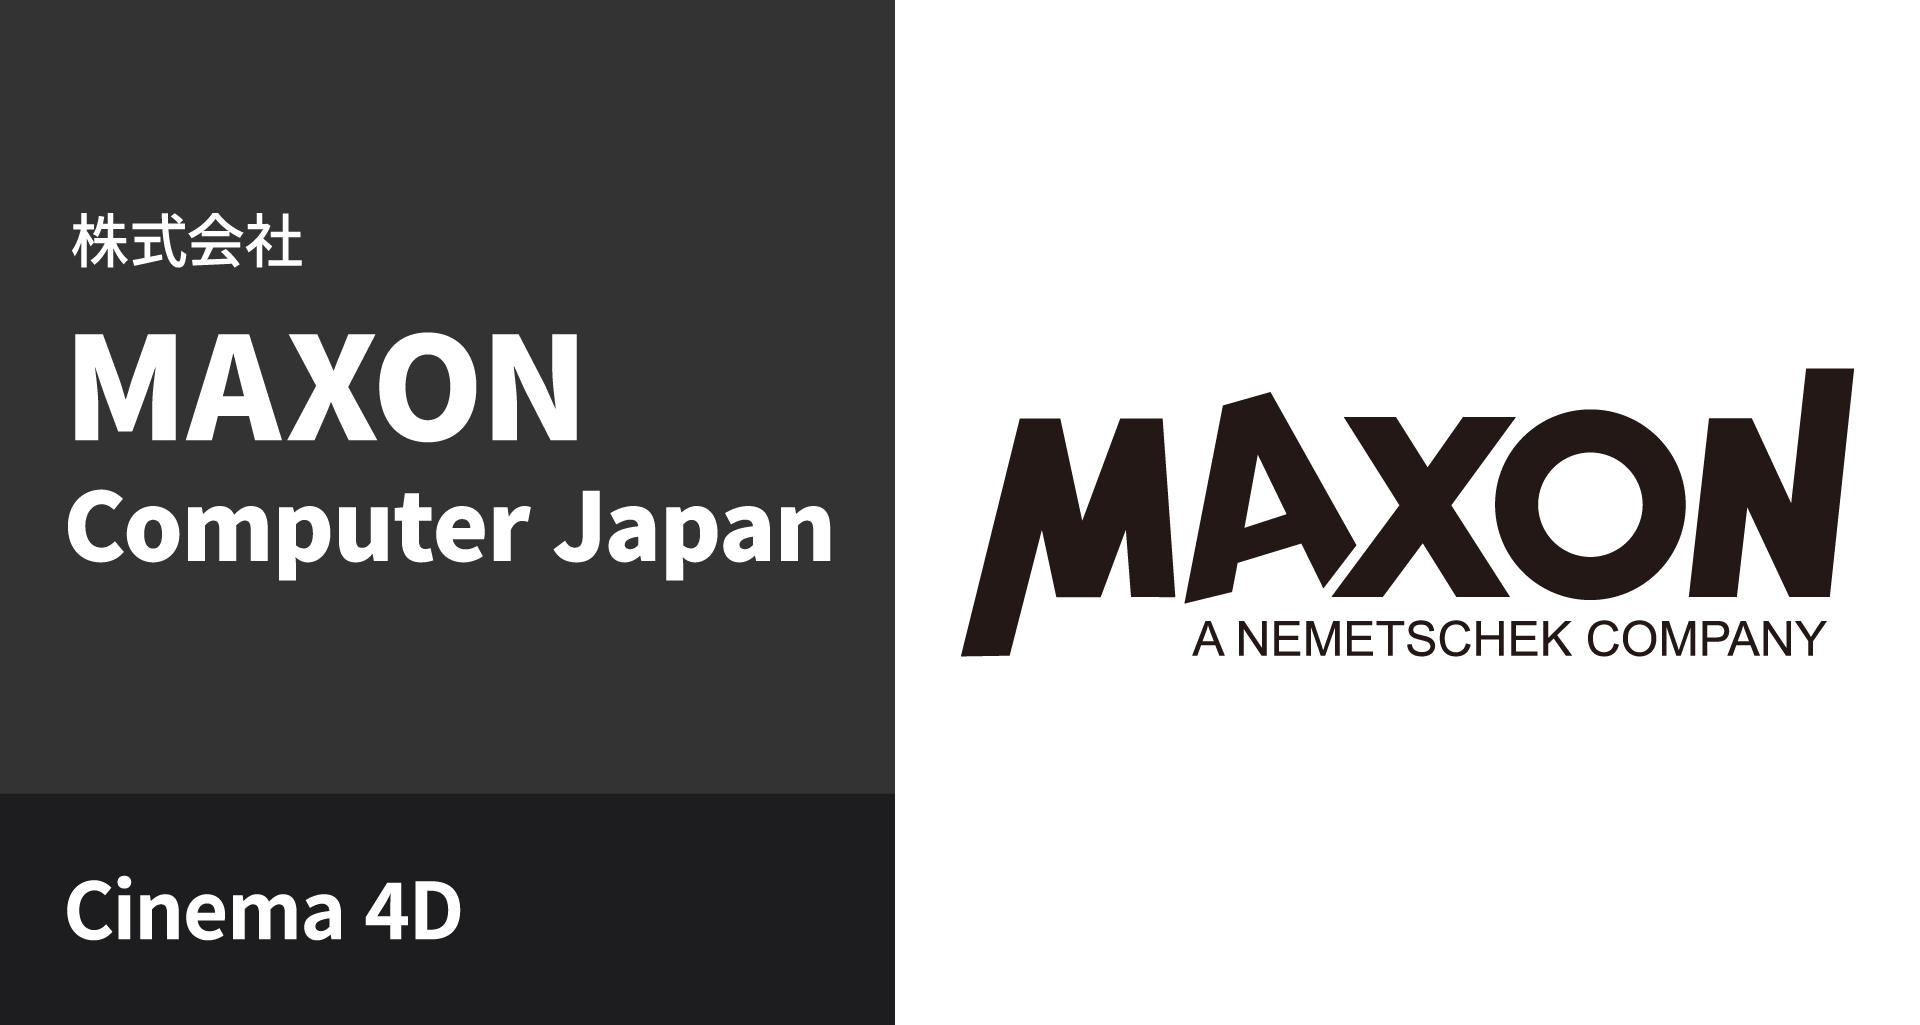 MAXON Computer Japan - Cinema 4D